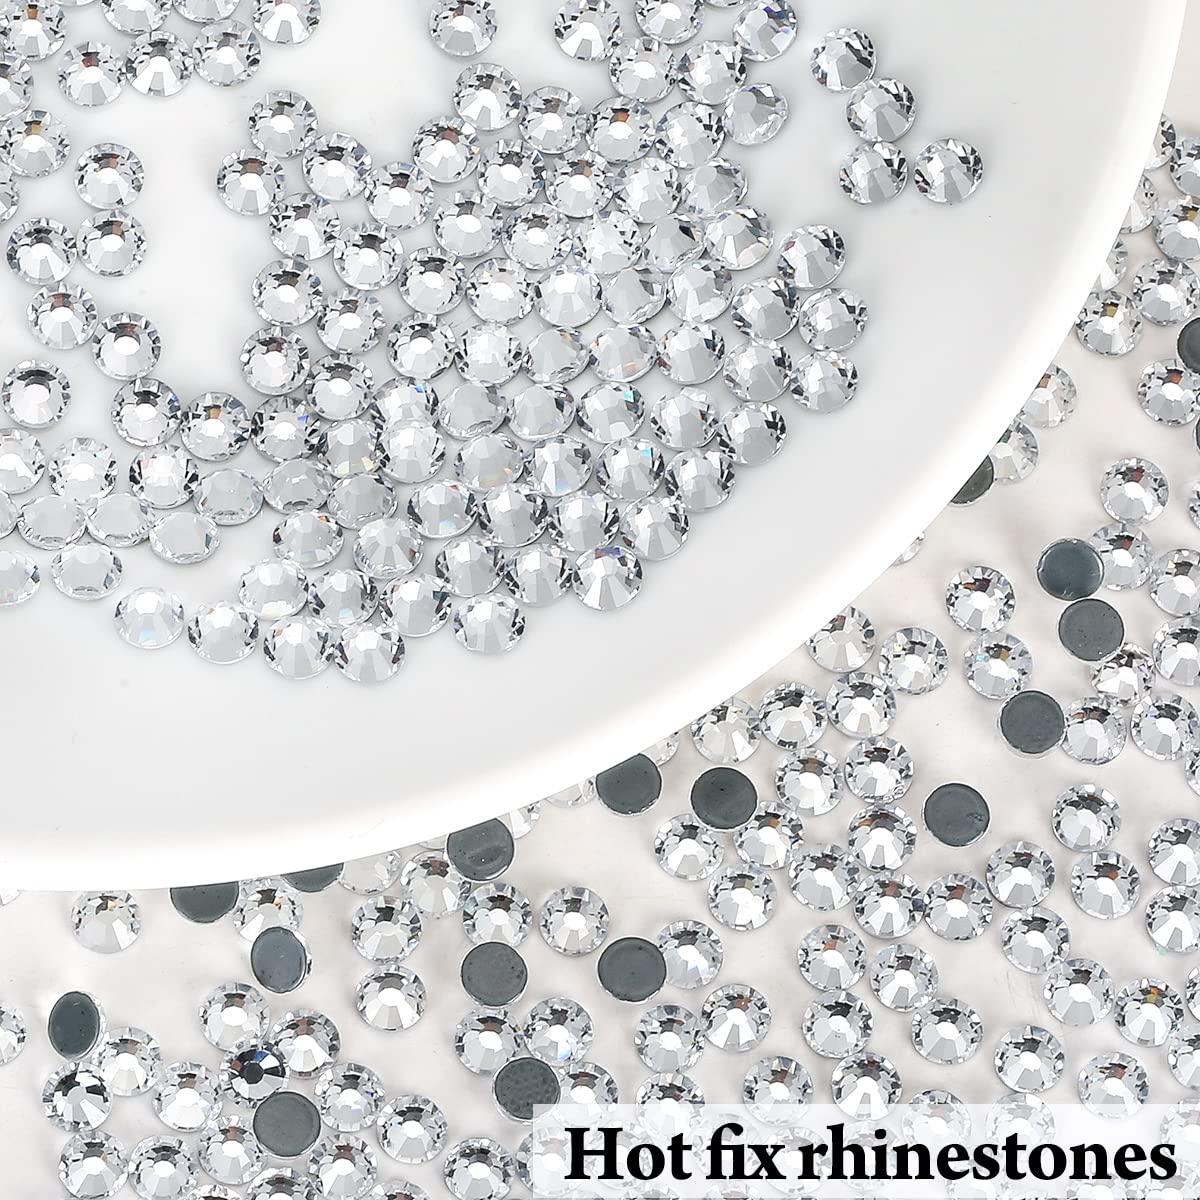 Novani Rhinestones 1440pcs SS20 Glass Rhinestones Crystal Flatback Gemstones  for Crafts Nails Makeup Bags and Shoes